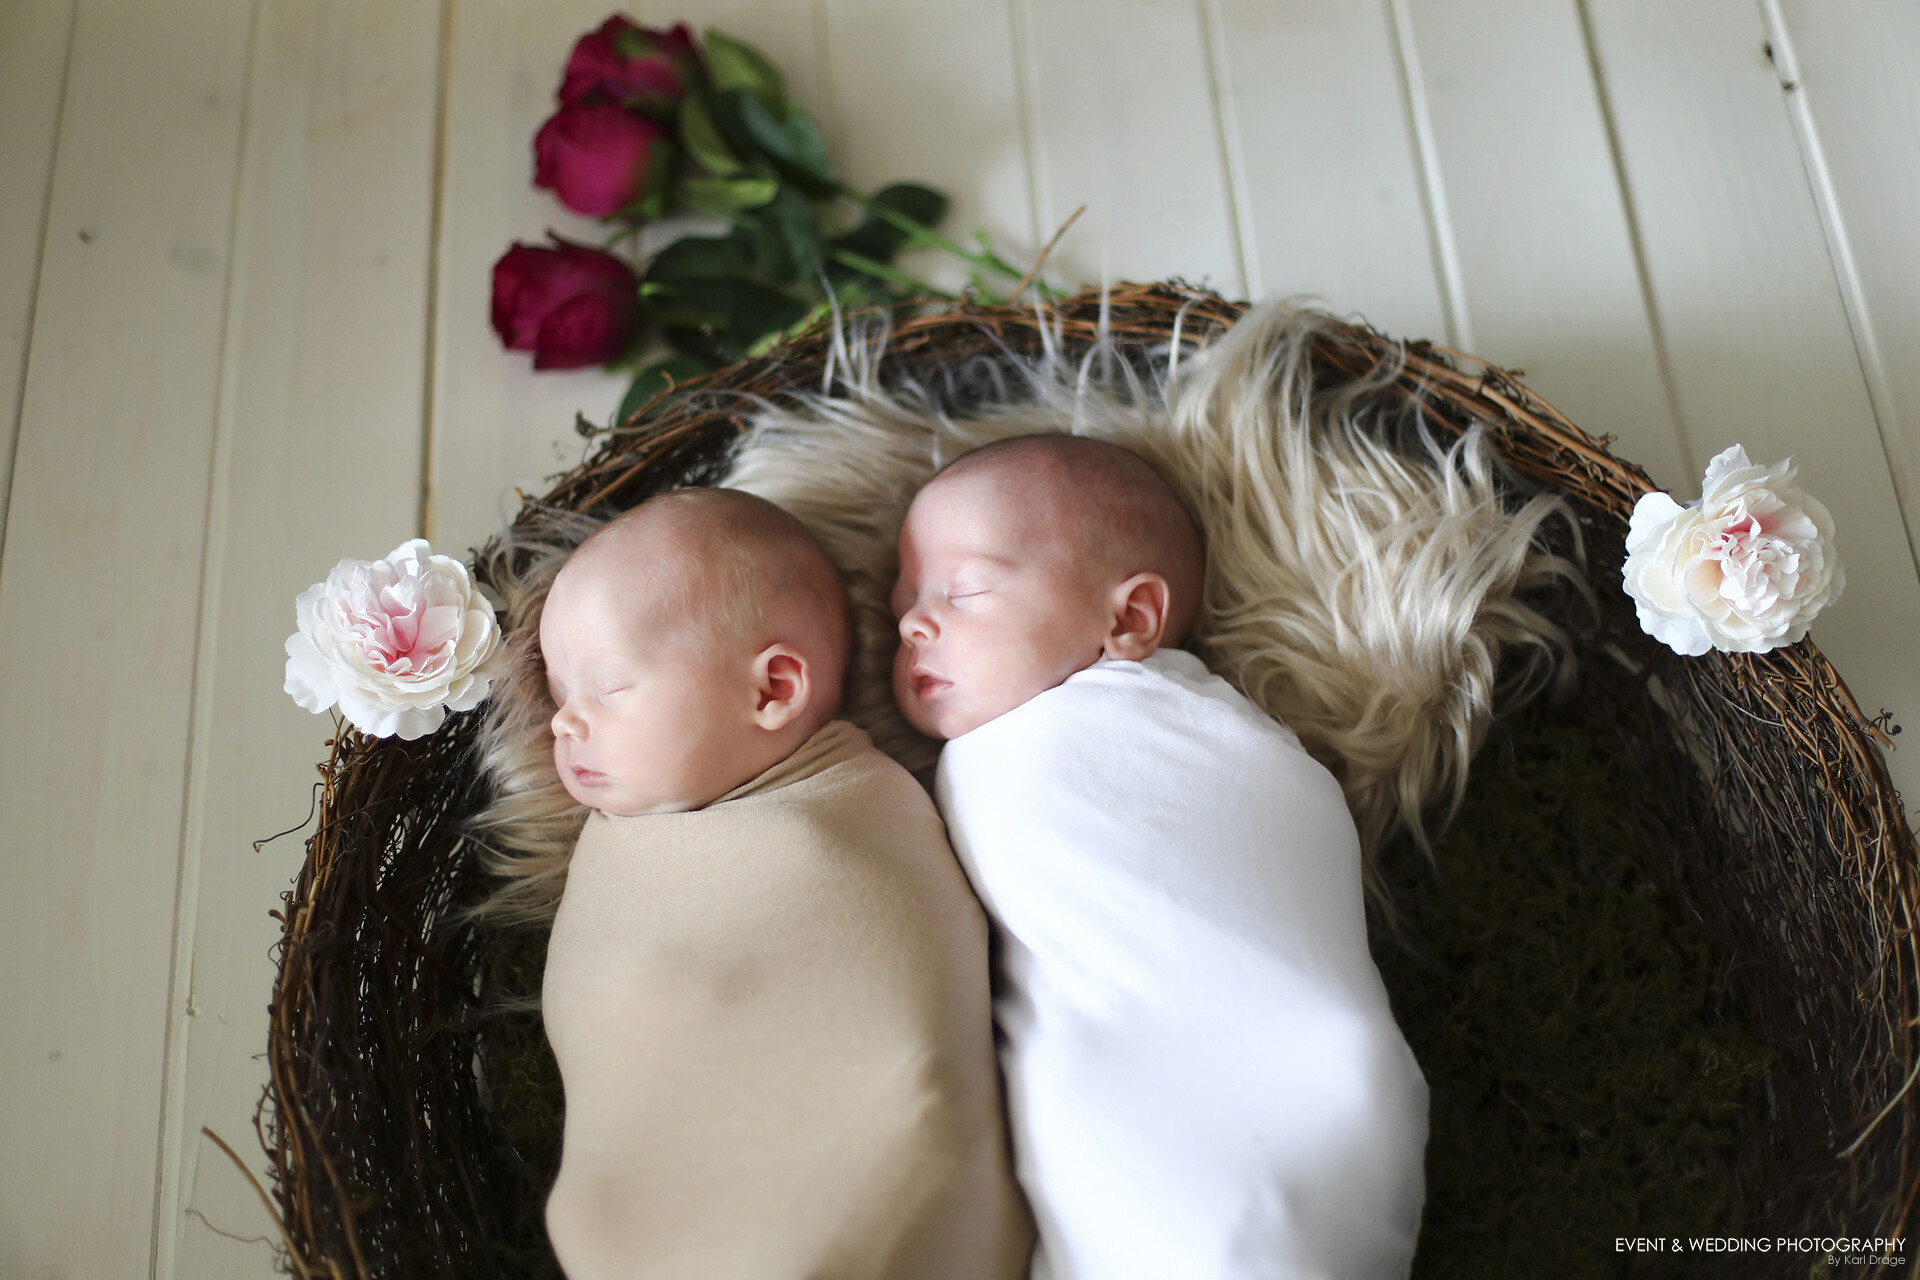 Newborn twin girls in a natural nest photo prop.